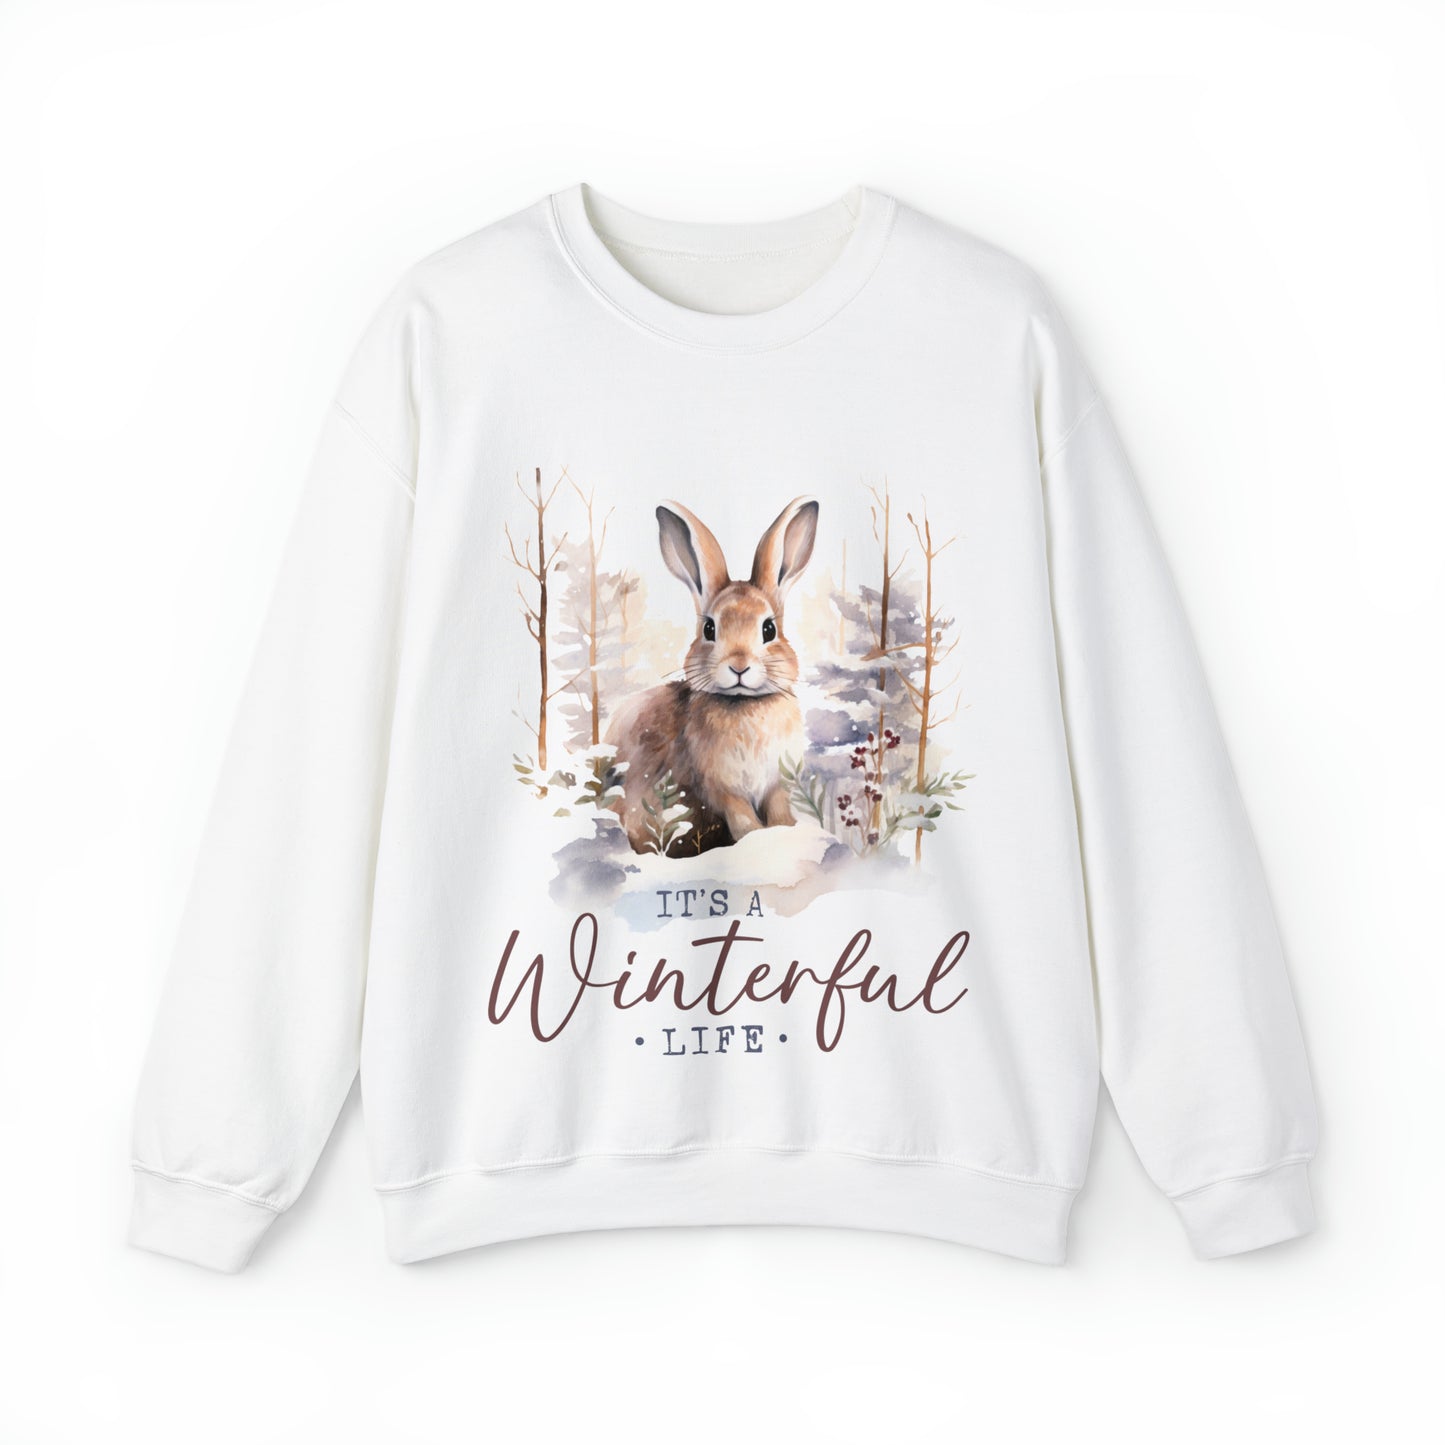 The Winterful Life Wanderlust Sweatshirt